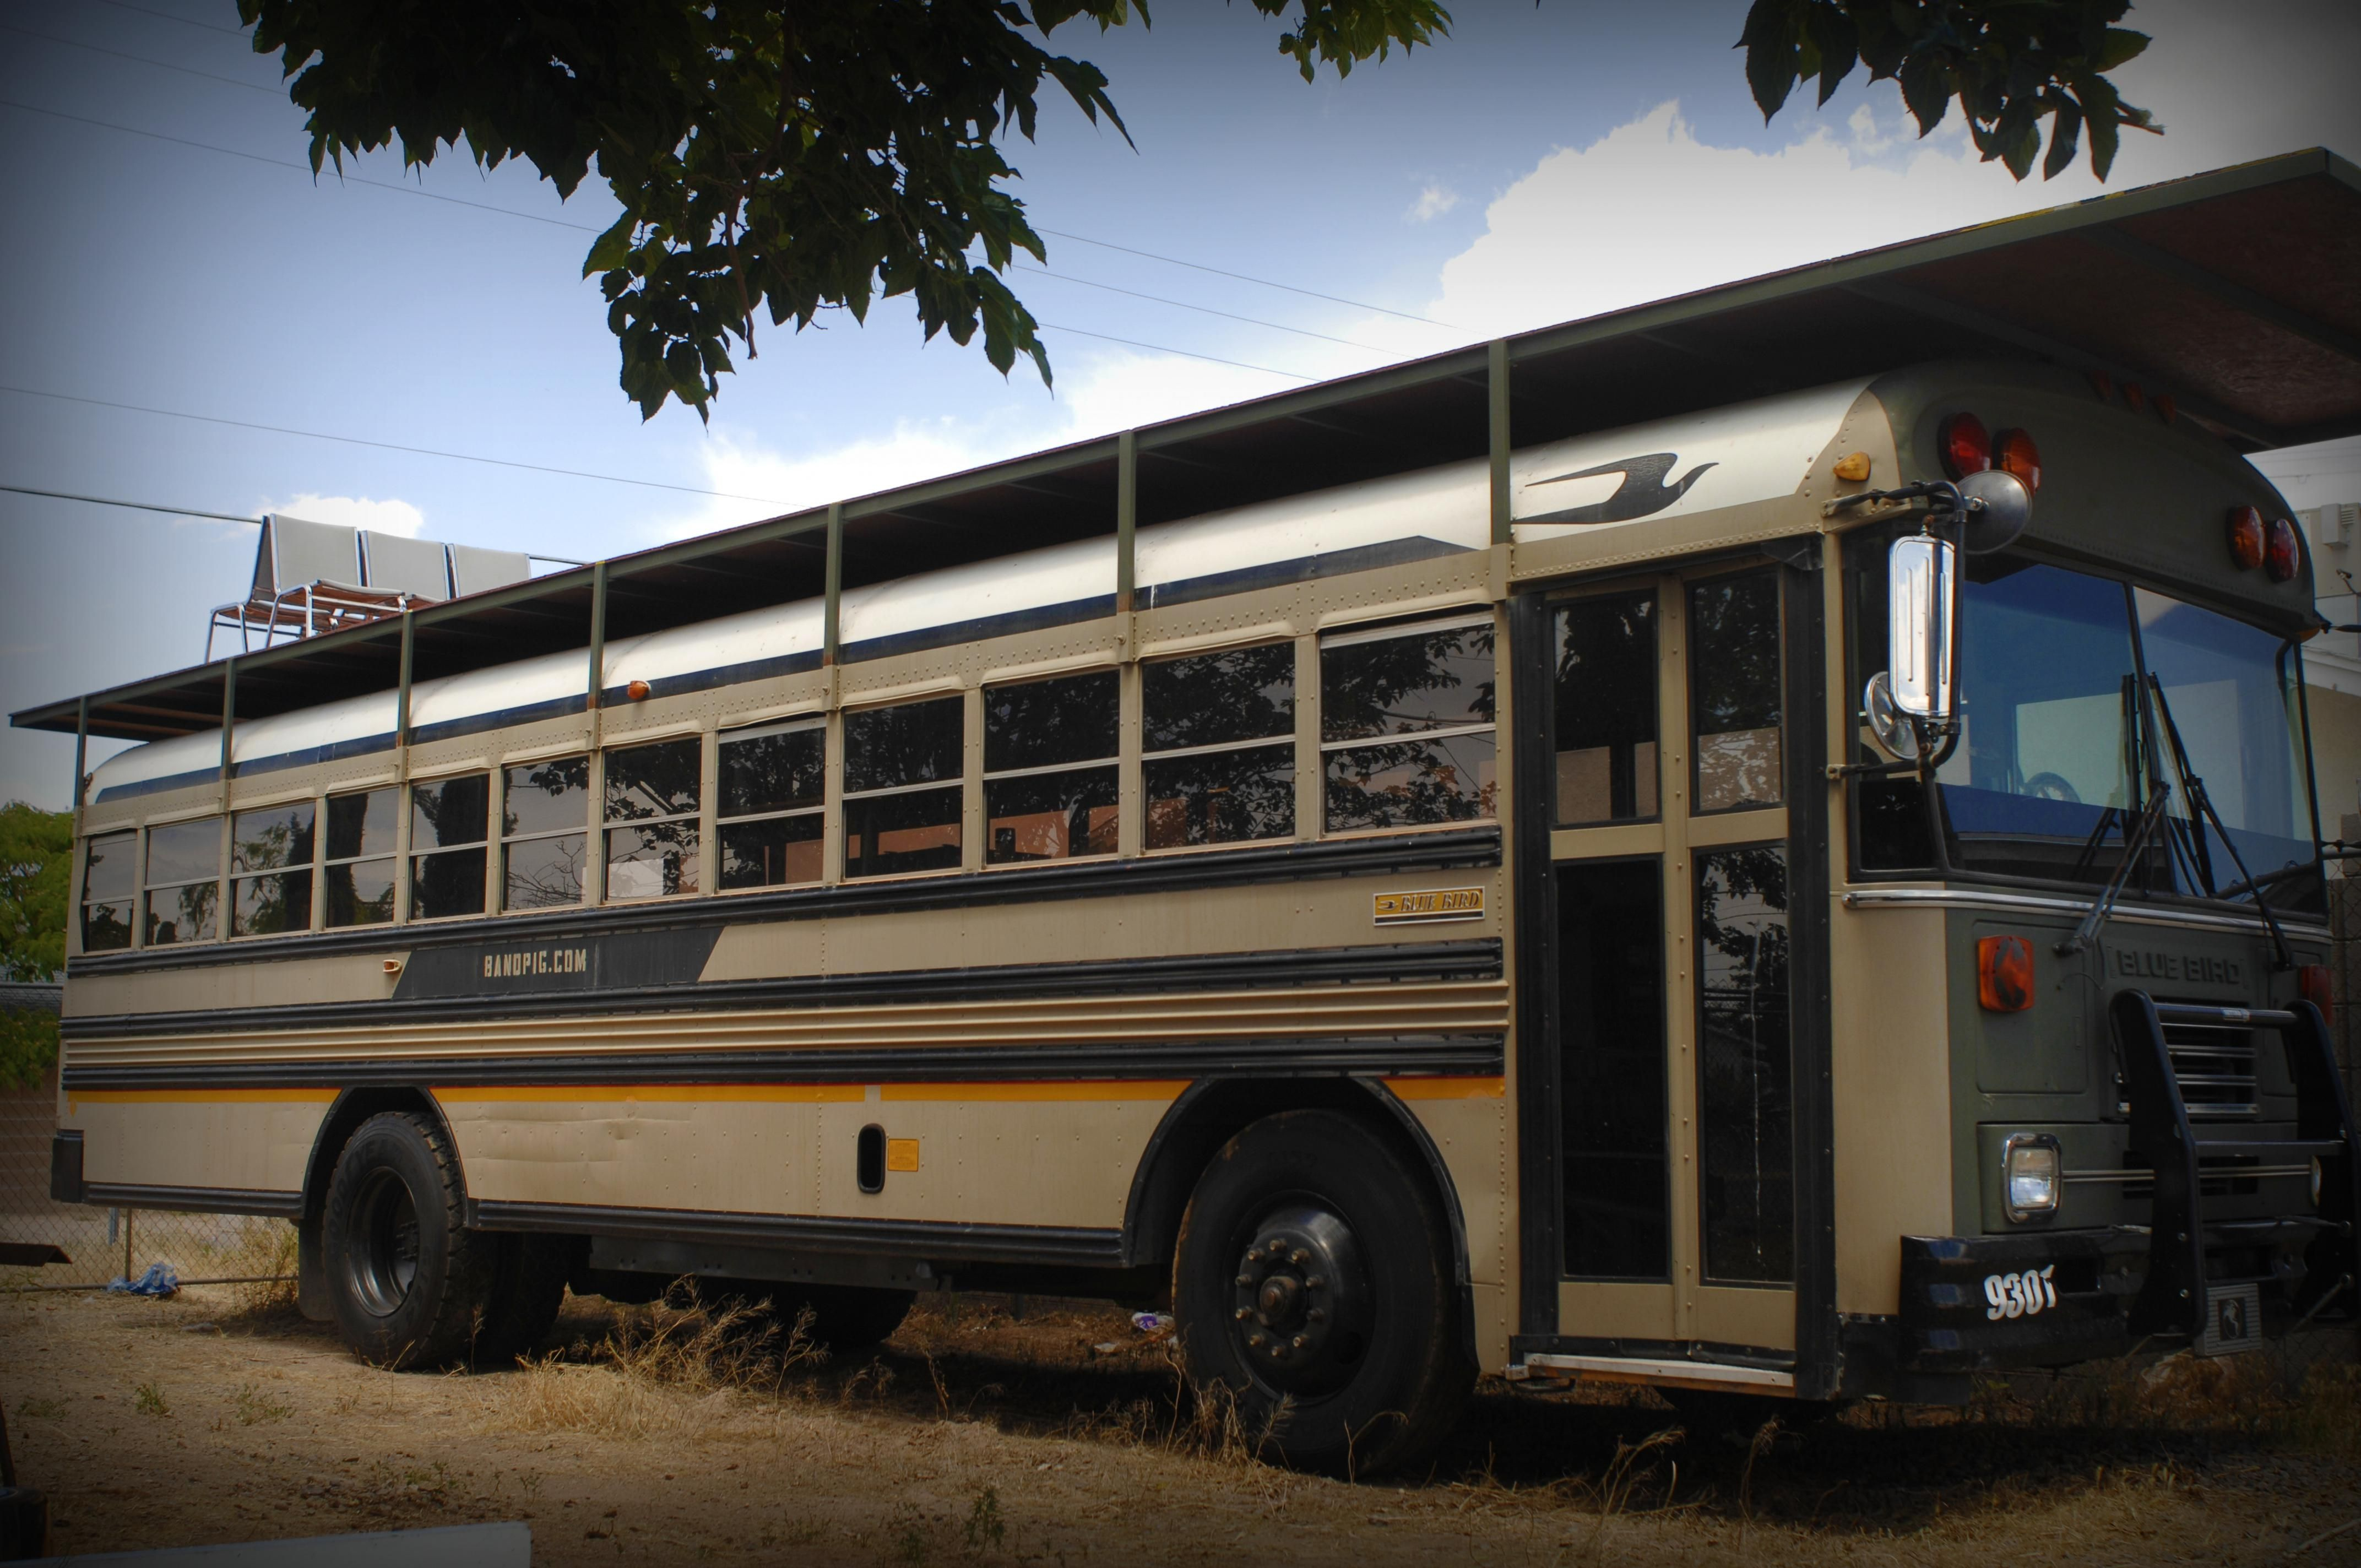 Rv Roof Deck Plans Bus Trailer And Train School Bus Rv Bus inside sizing 4287 X 2847